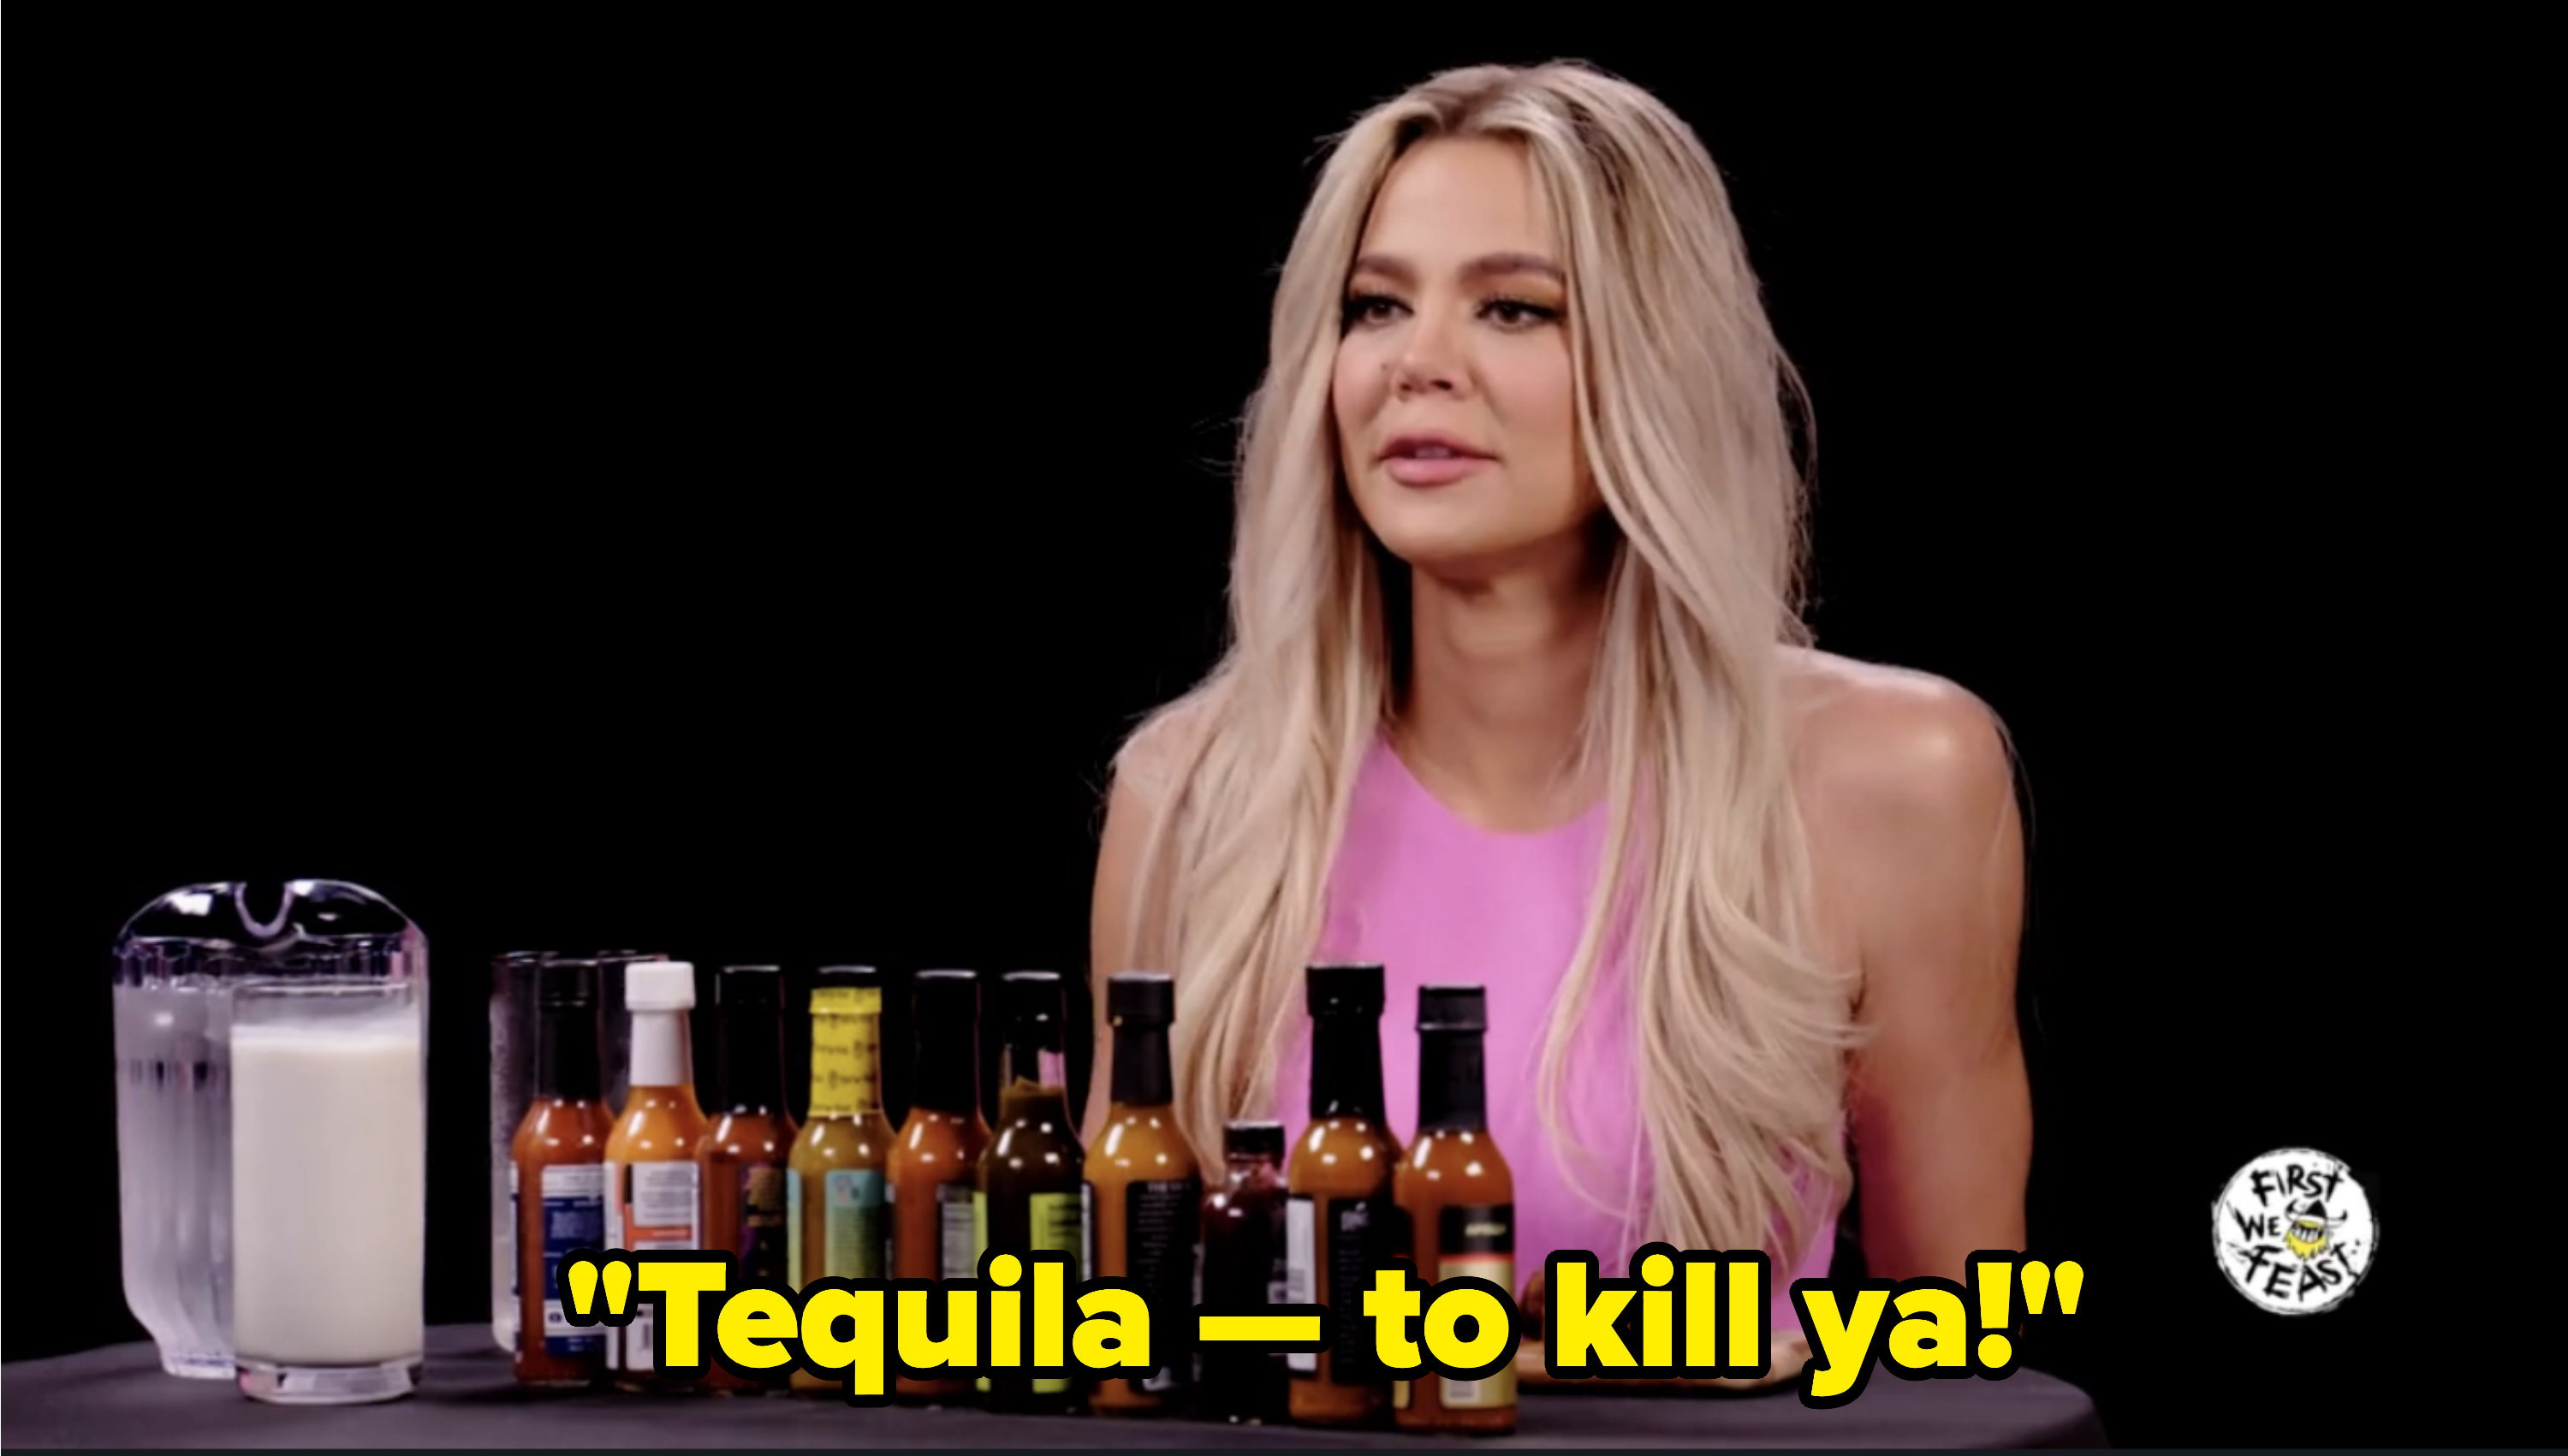 &quot;tequila - to kill ya&quot;